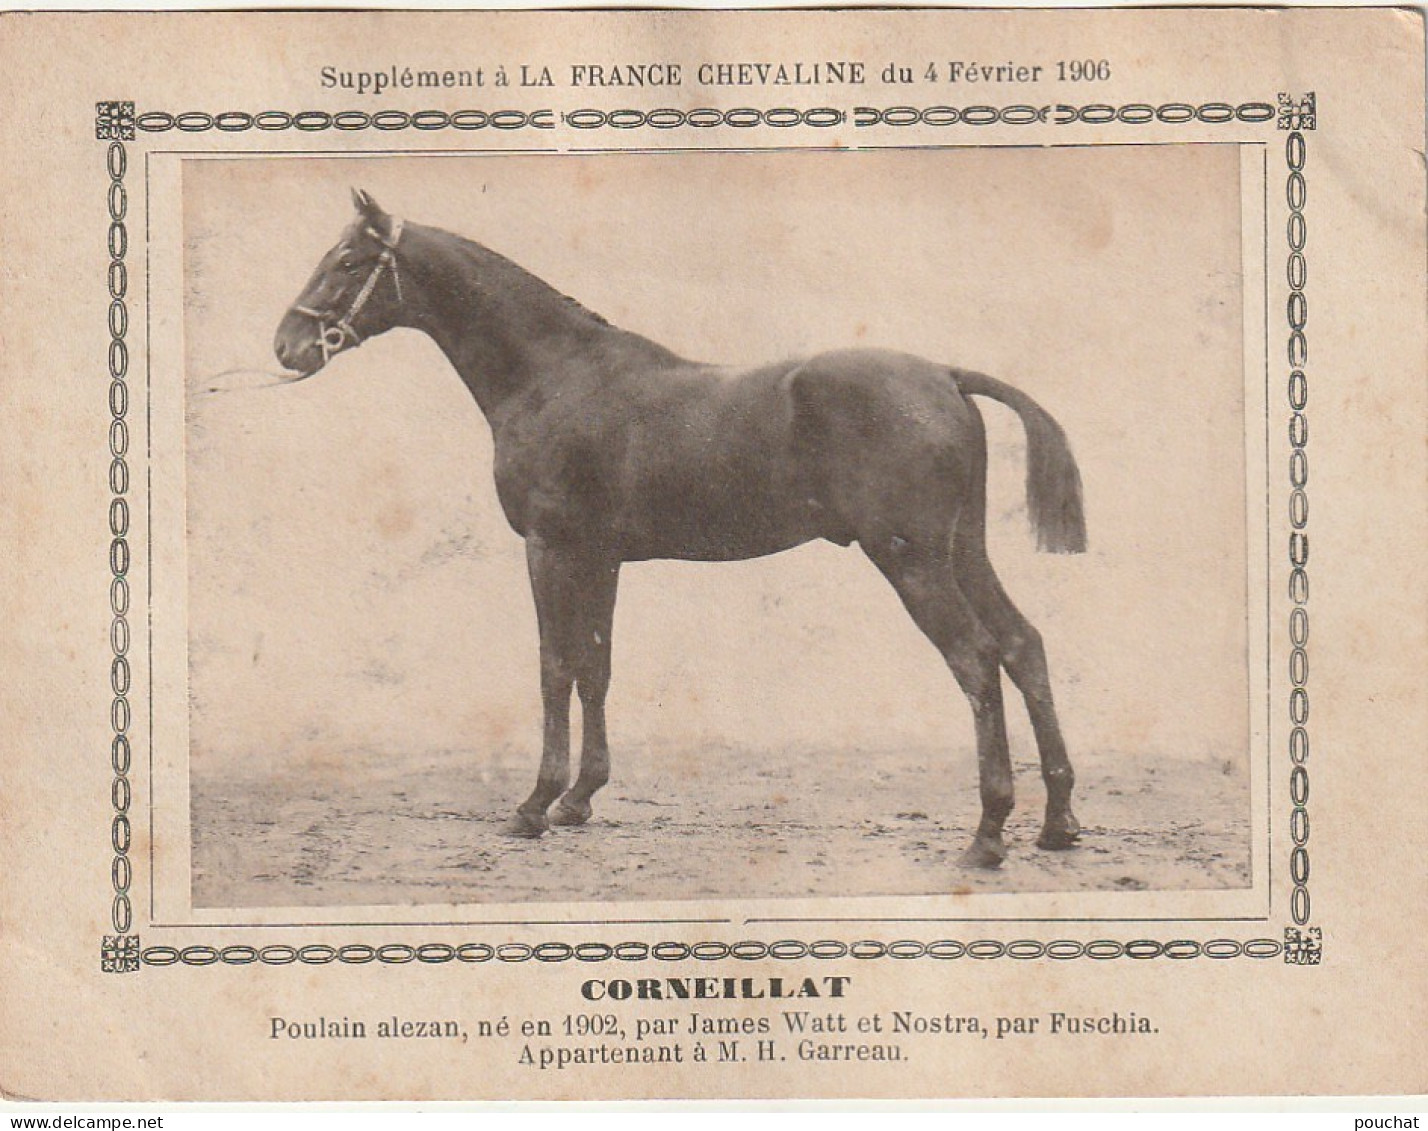 AA+ - " CORNEILLAT " - POULAIN ALEZAN  APPARTENANT A M. H. GARREAU - SUPPL. FRANCE CHEVALINE  FEVRIER 1906 - Paardensport